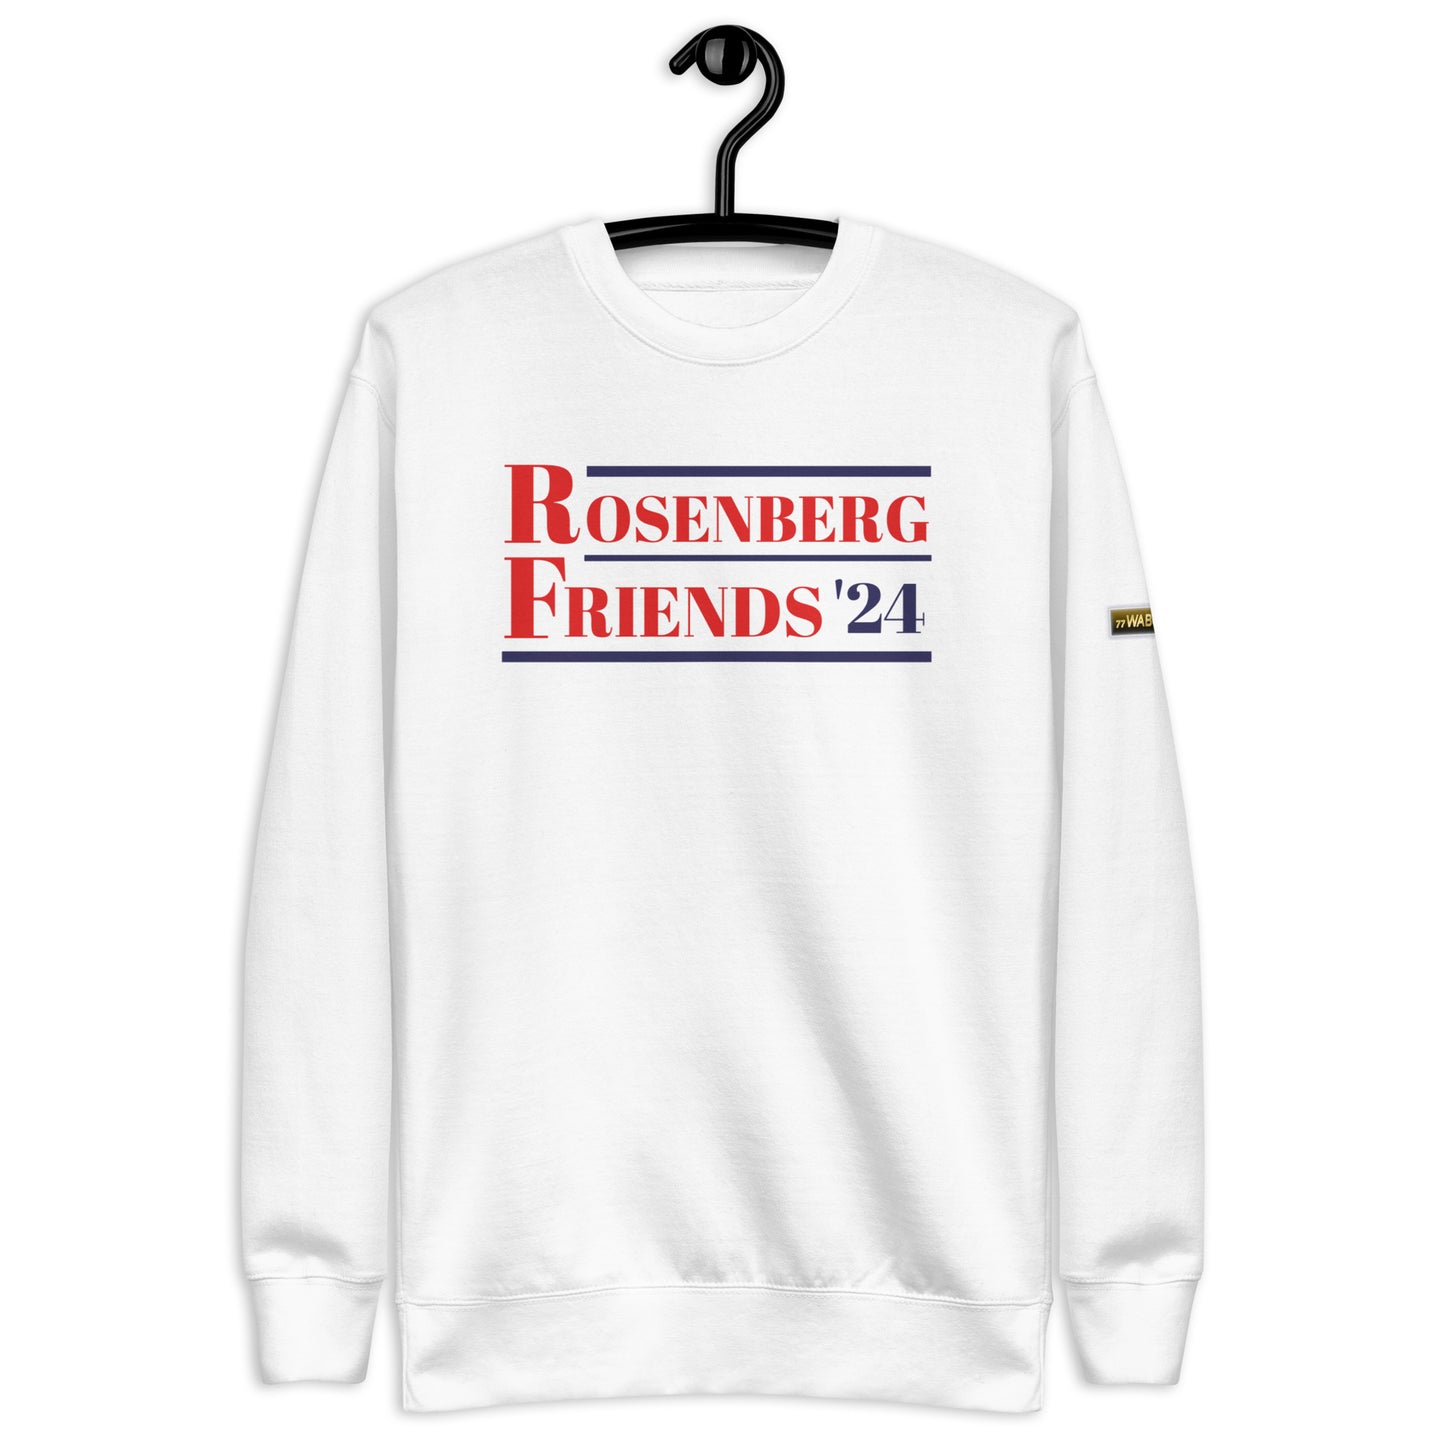 Rosenberg - Friends '24 Unisex Premium Sweatshirt